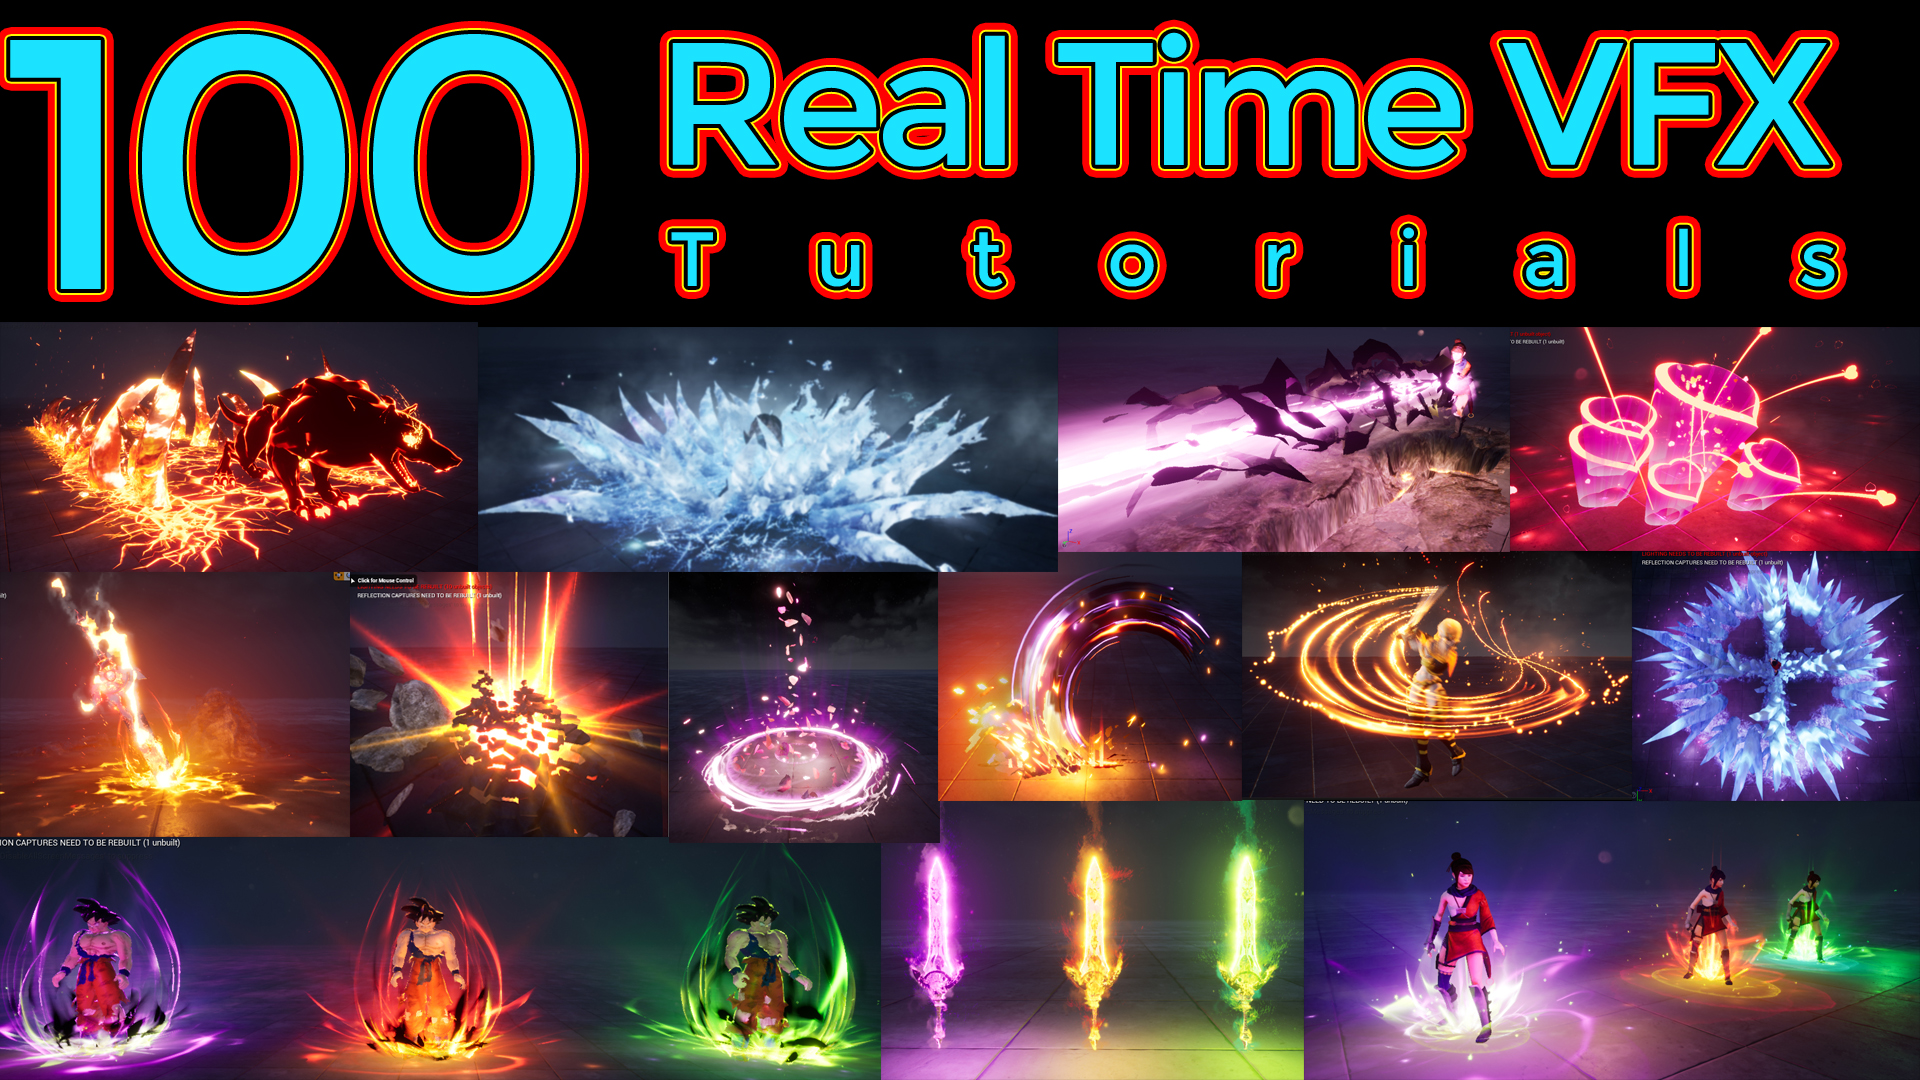 100 Real Time VFX Tutorials